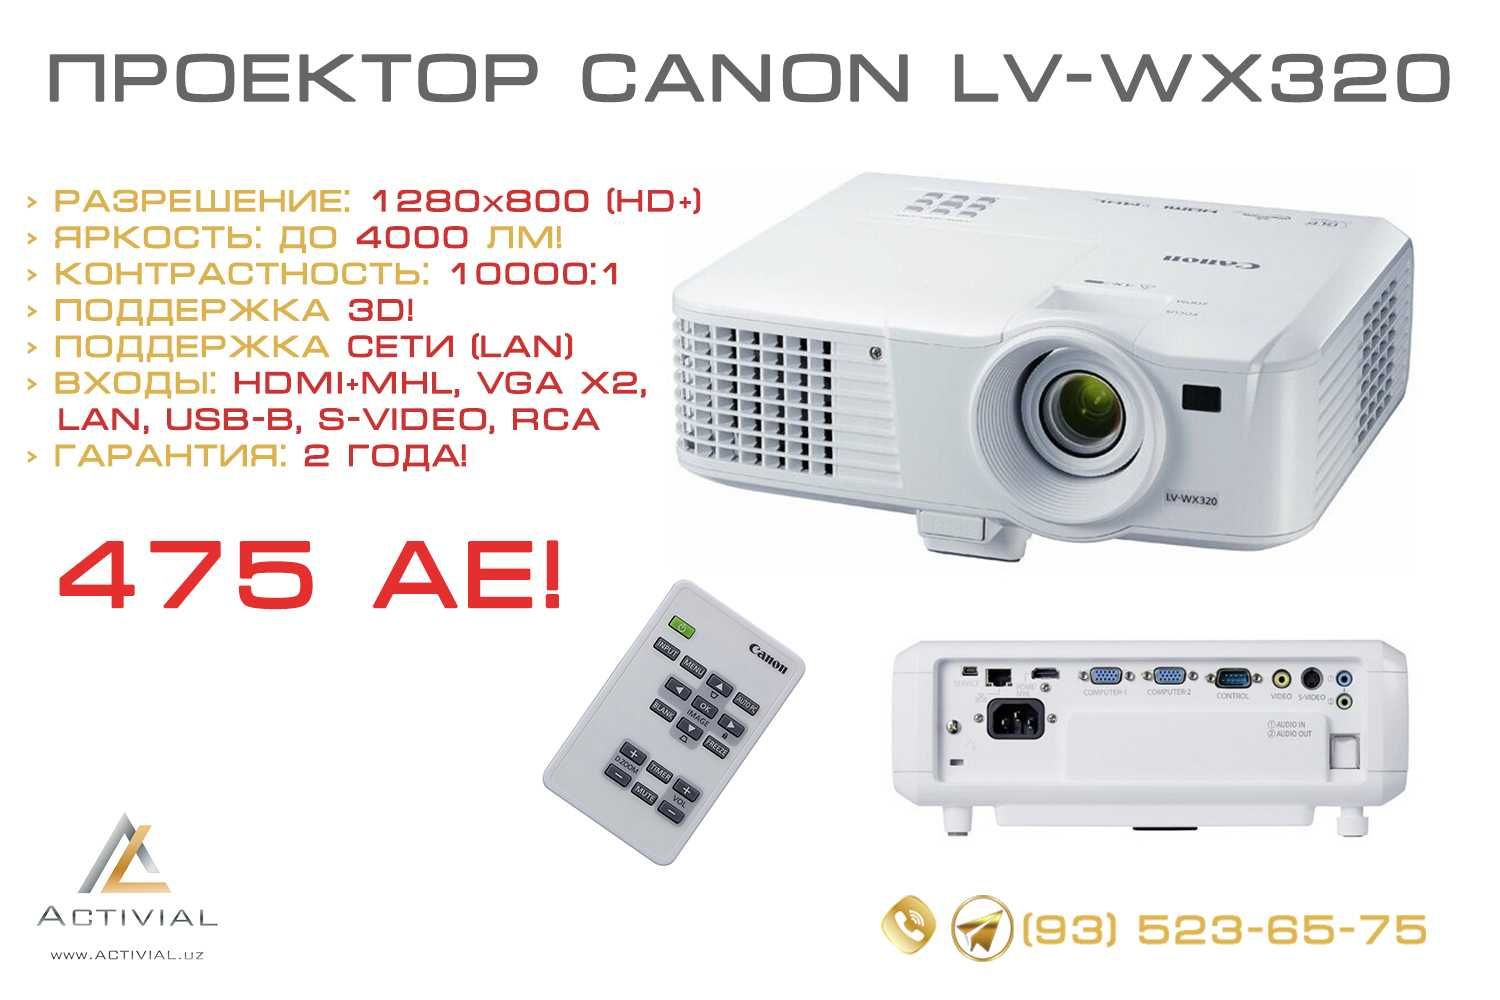 Яркий HD-проектор Сanon LV-WX320 от официального поставщика!